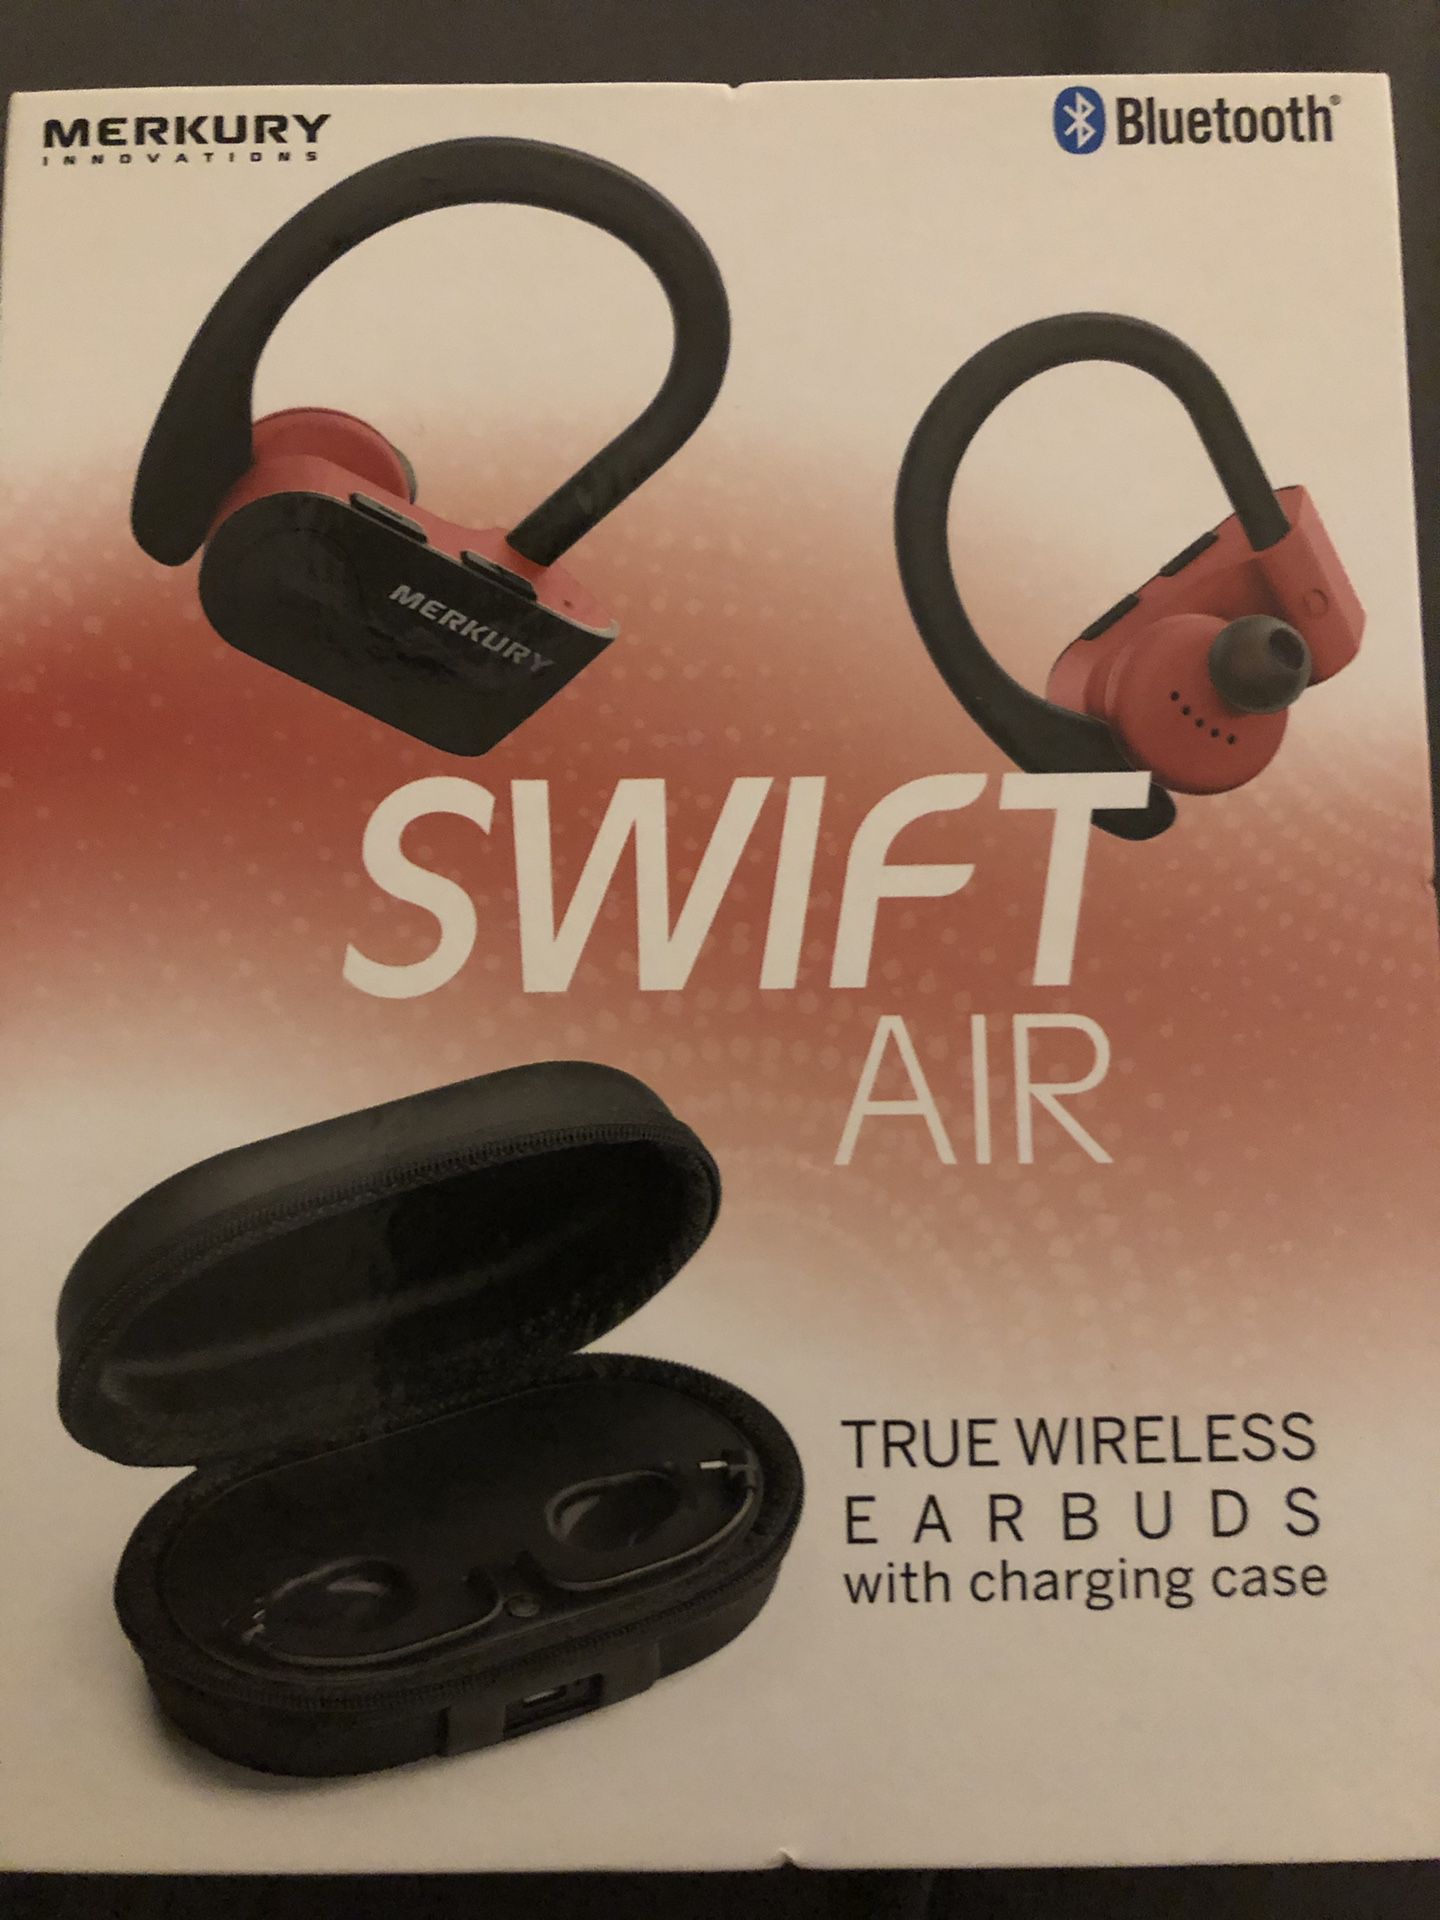 MERKURY Swift Air Bluetooth Wireless Earbuds